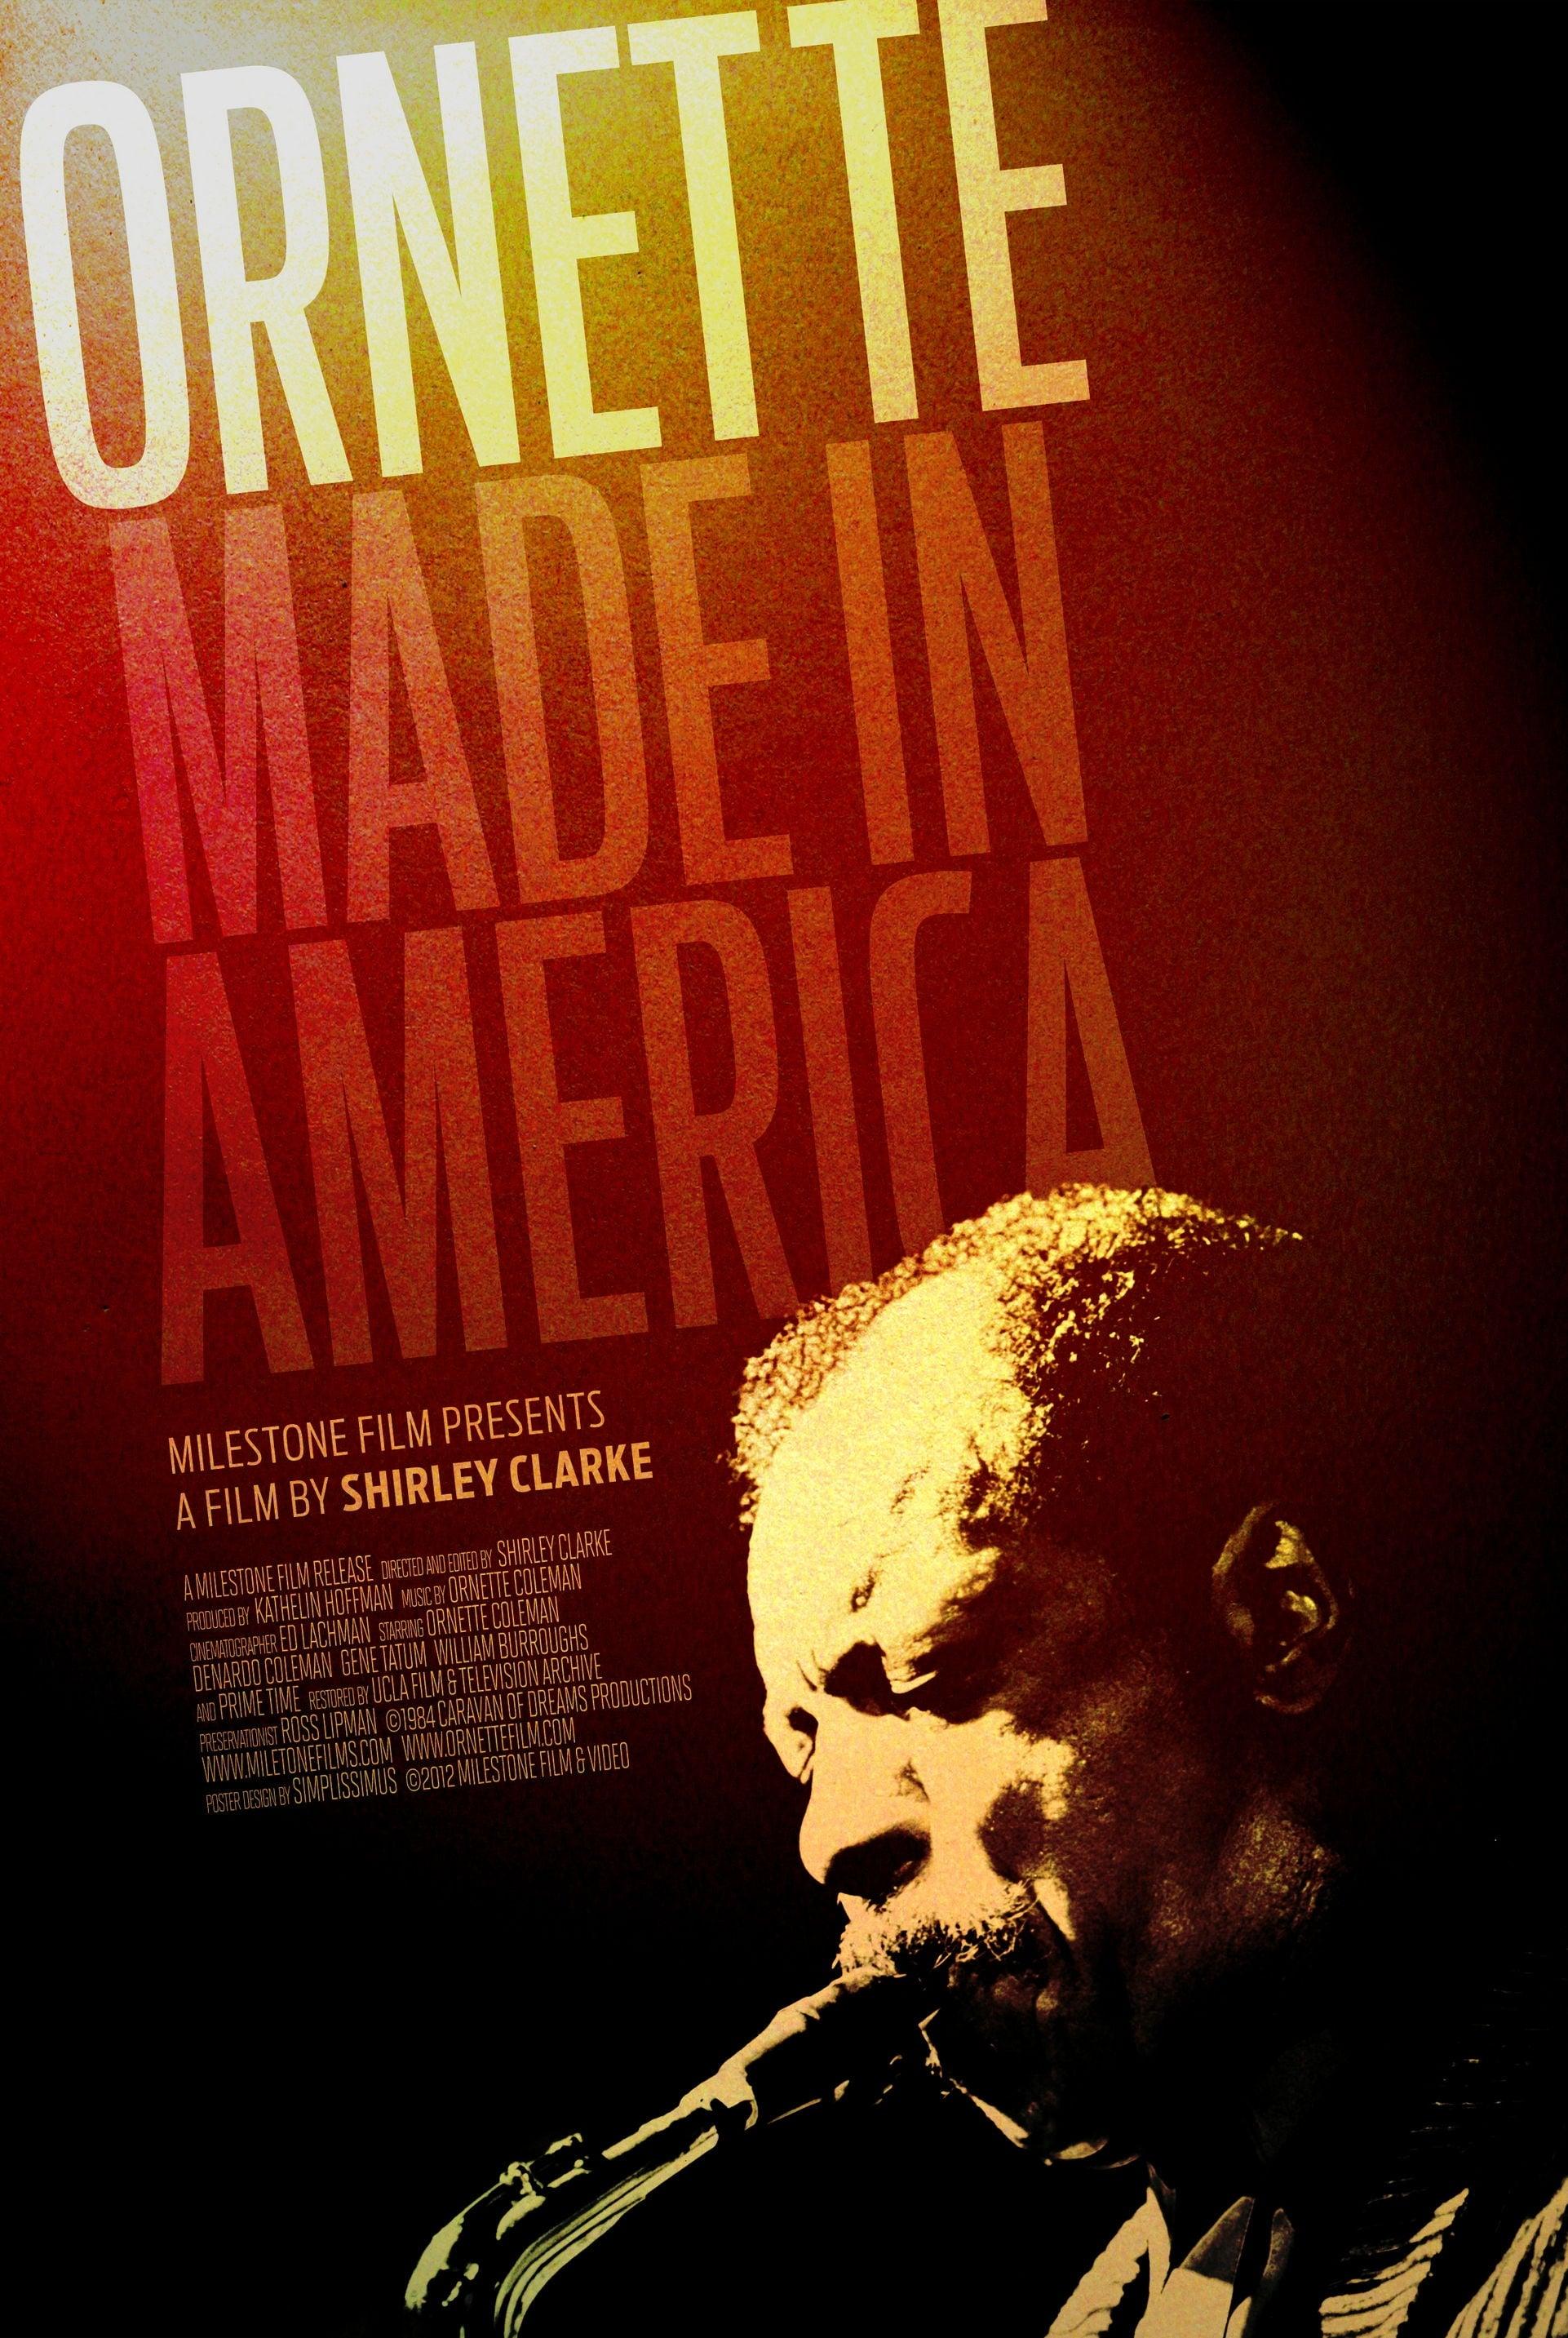 Ornette: Made in America poster